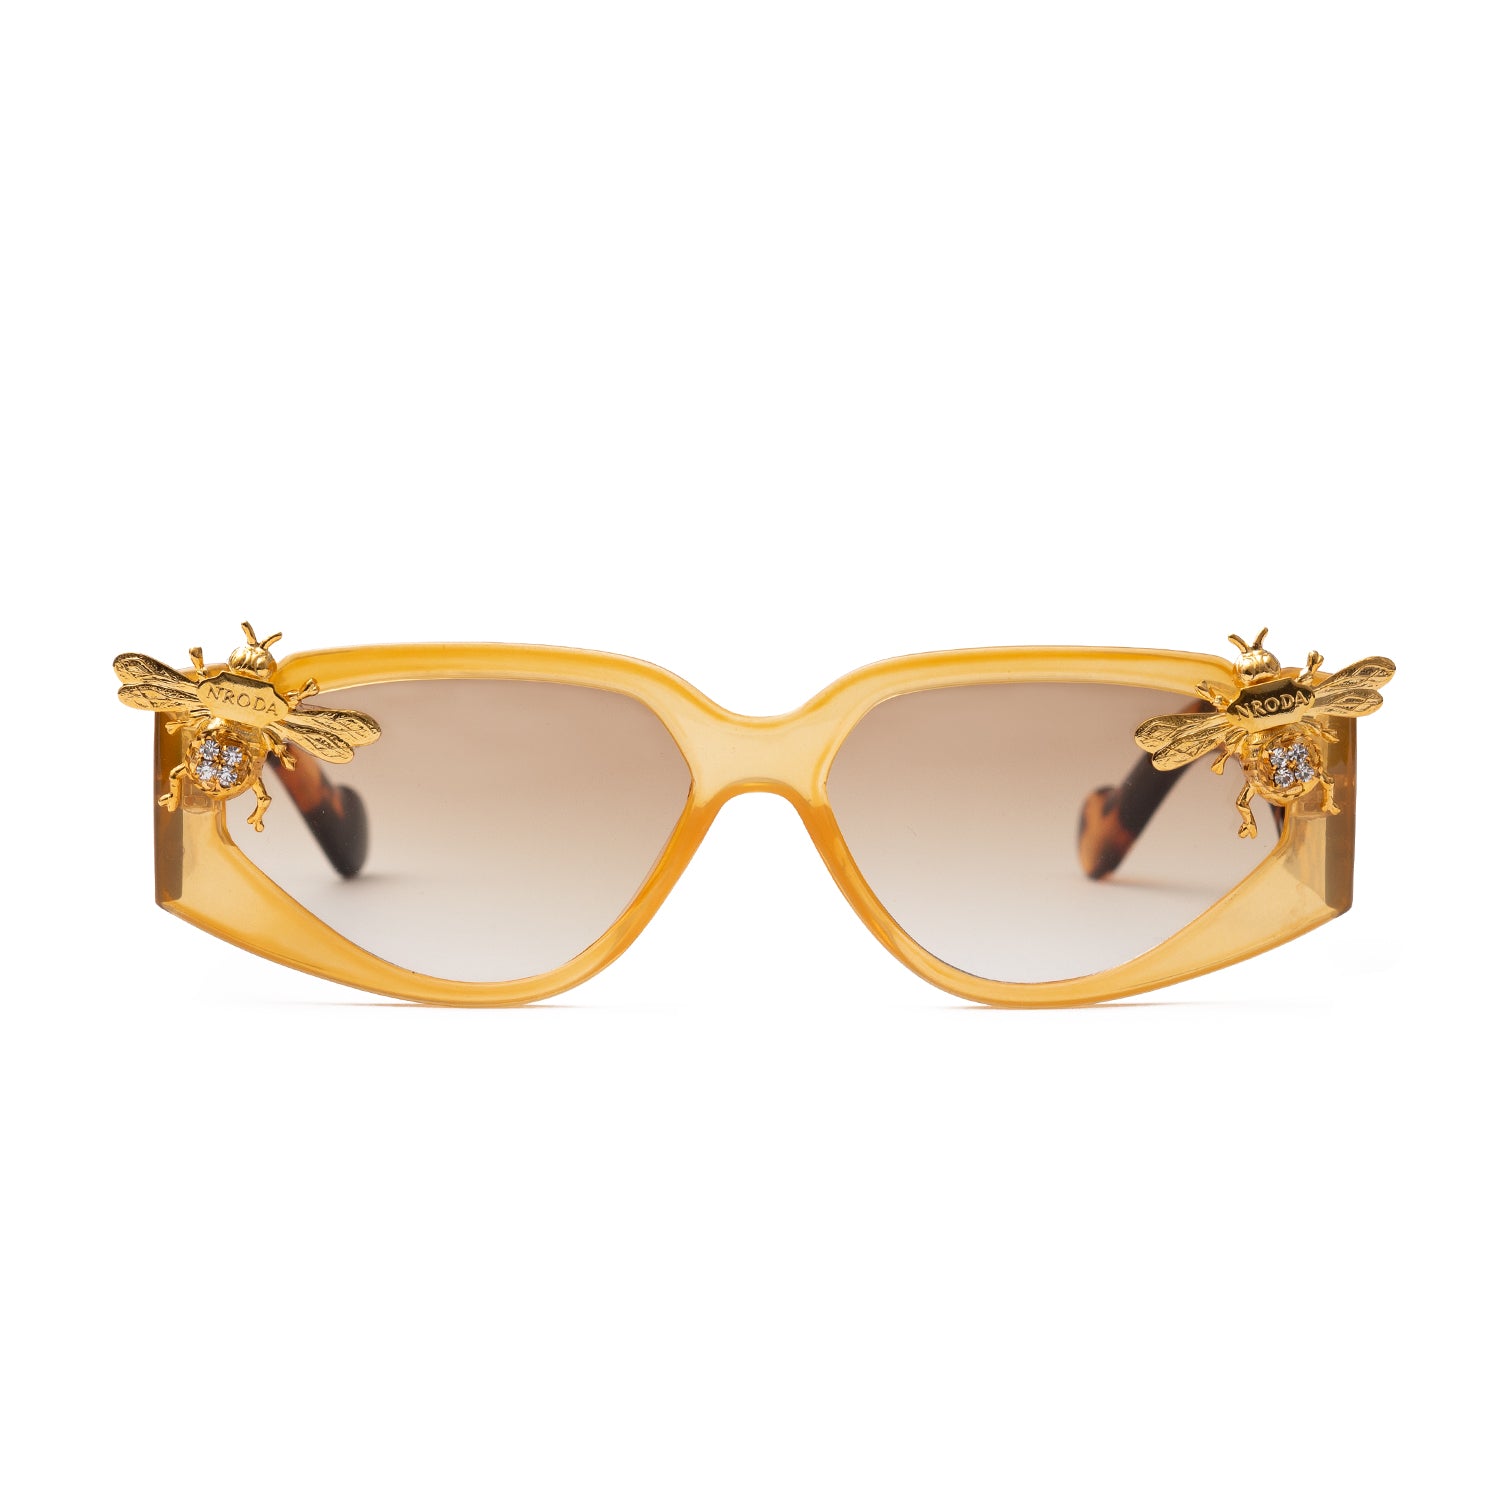 Nroda Riviera Bee - Gemstone Edition Citrine Eyewear Sunglasses Collection, Tnemnroda man- NRODA